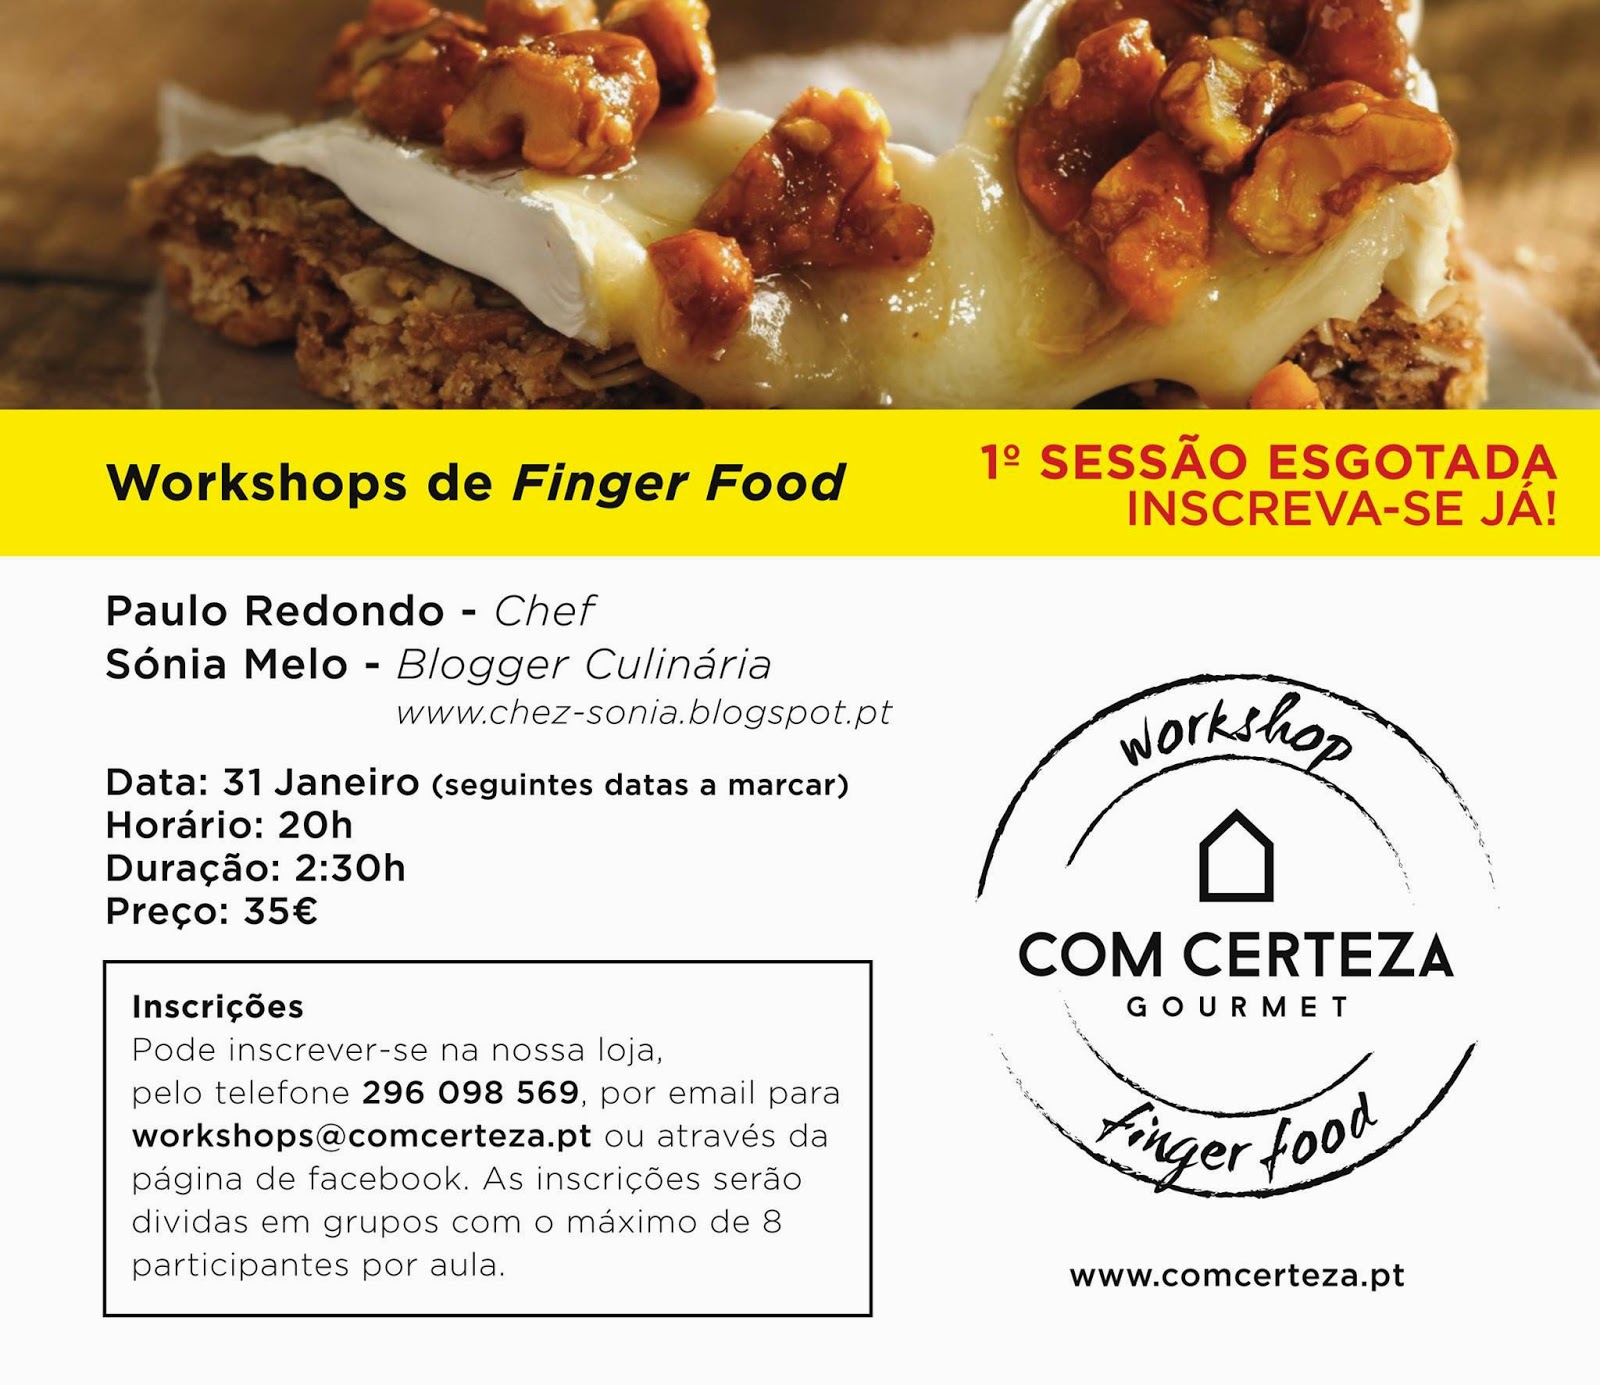 Workshop de Finger Food - Com Certeza Gourmet!